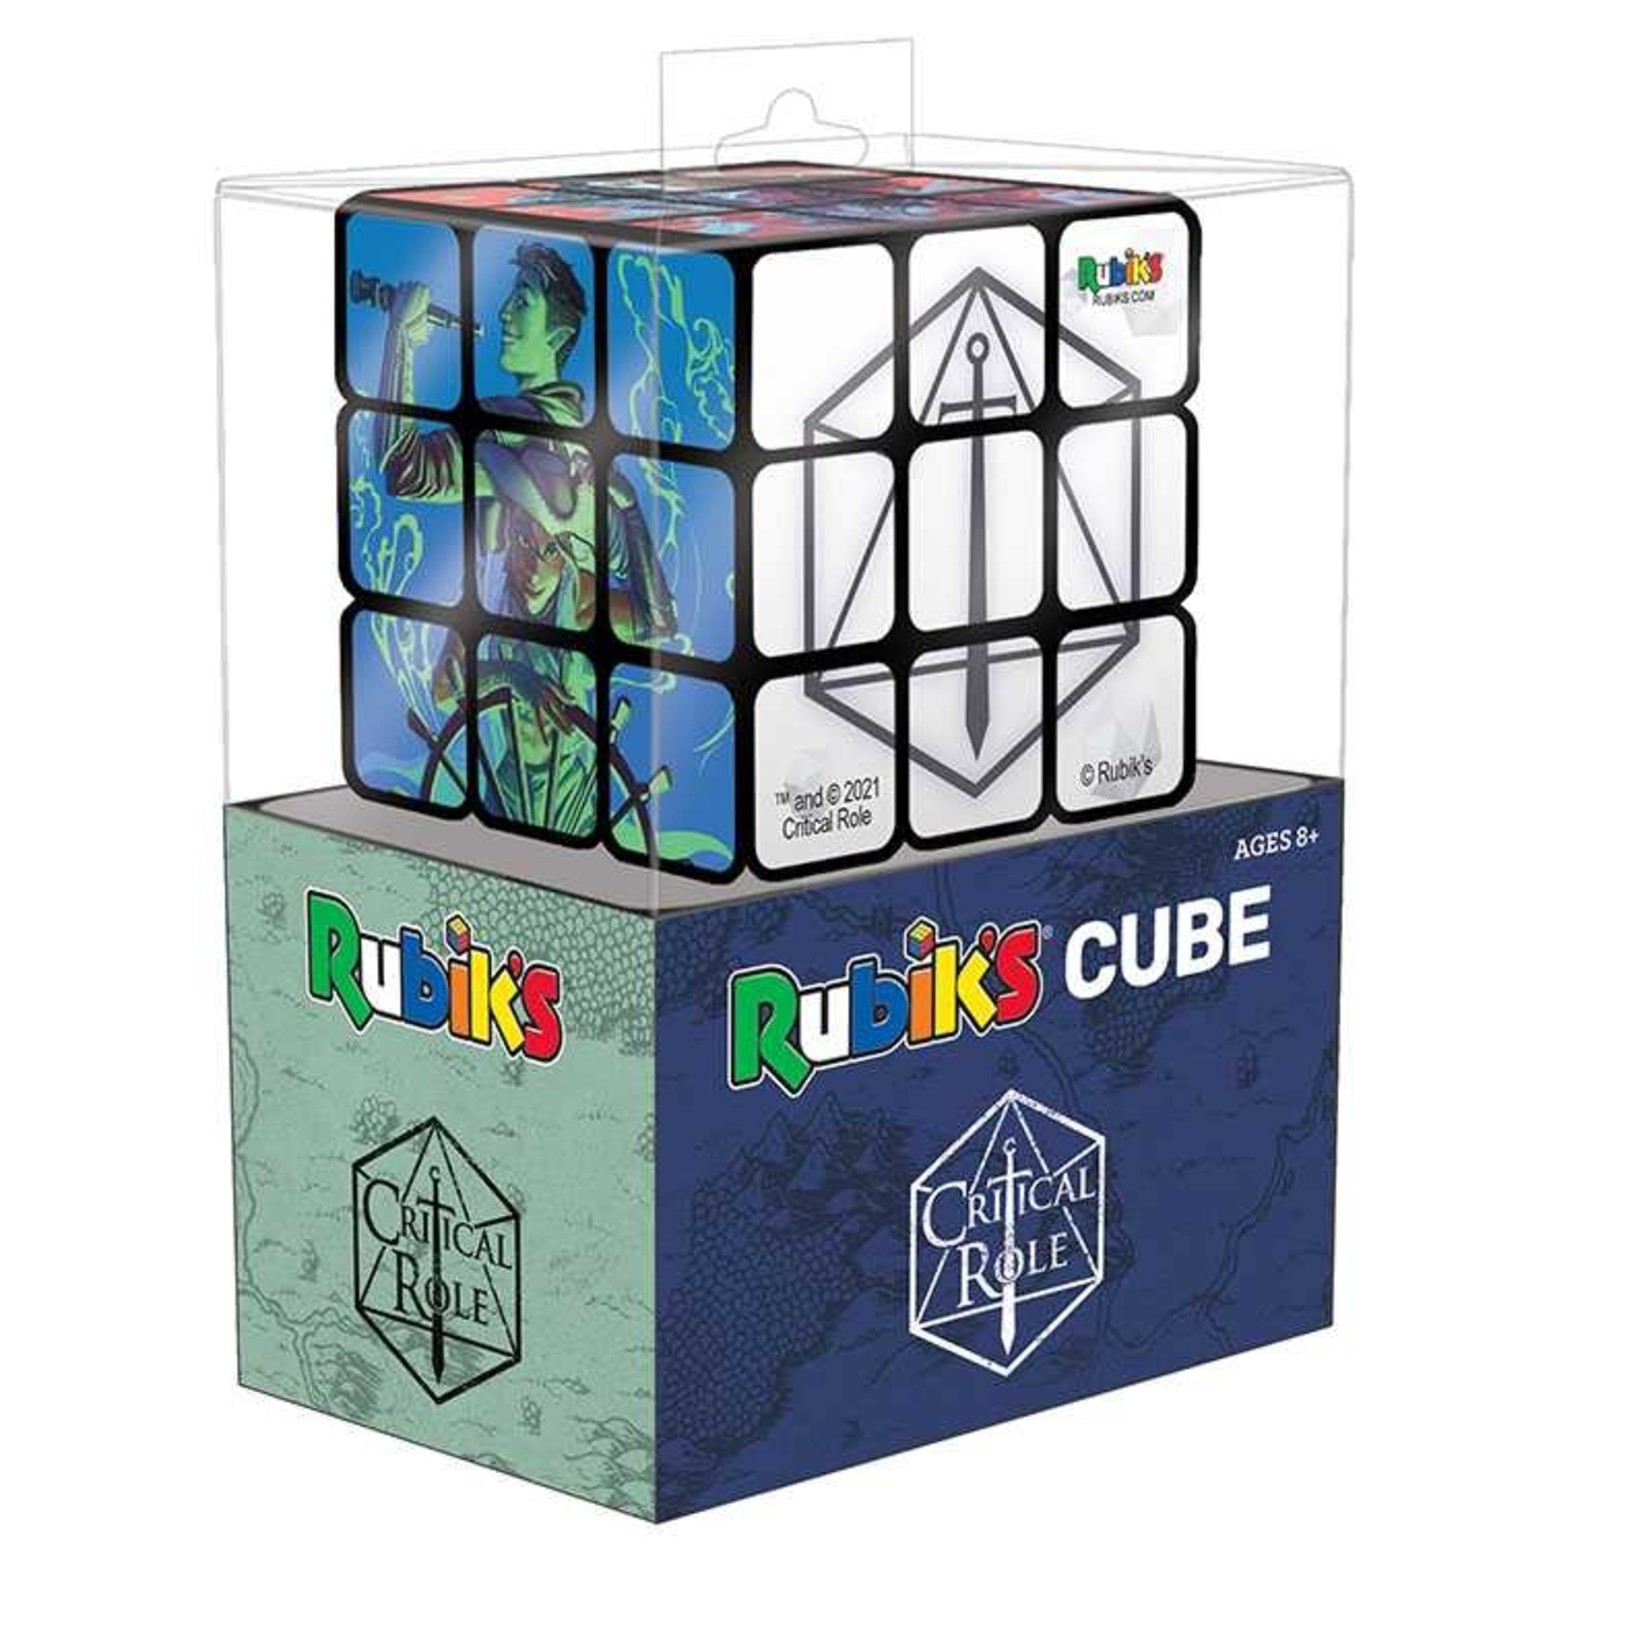 Rubik's Rubik's Cube Critical Role